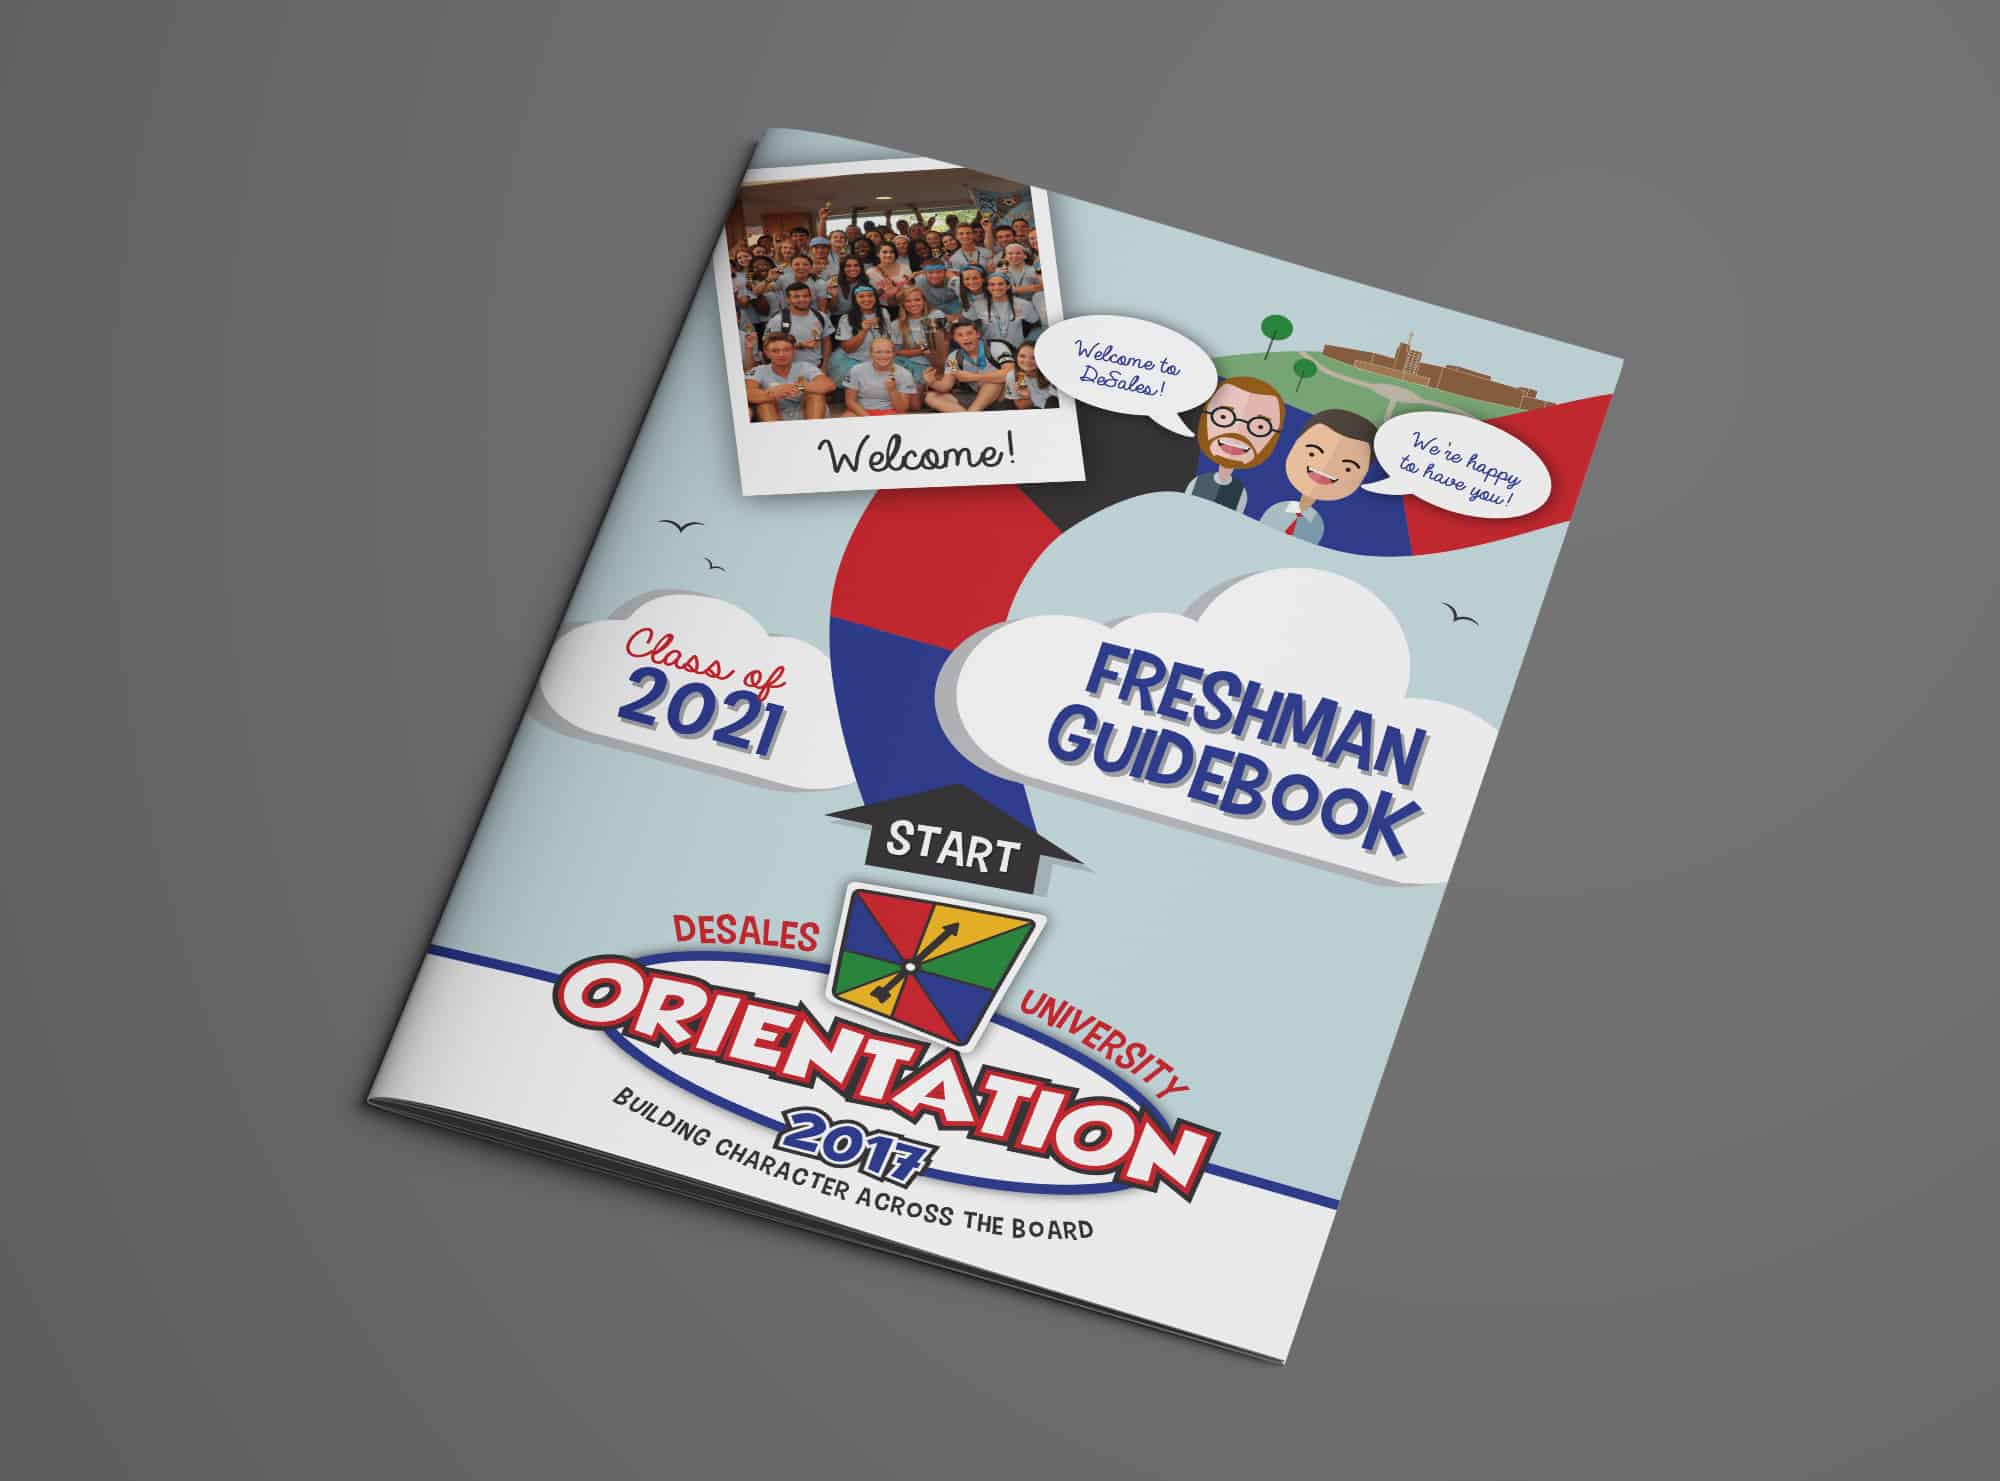 36-Page DeSales University Orientation Guidebook Cover design